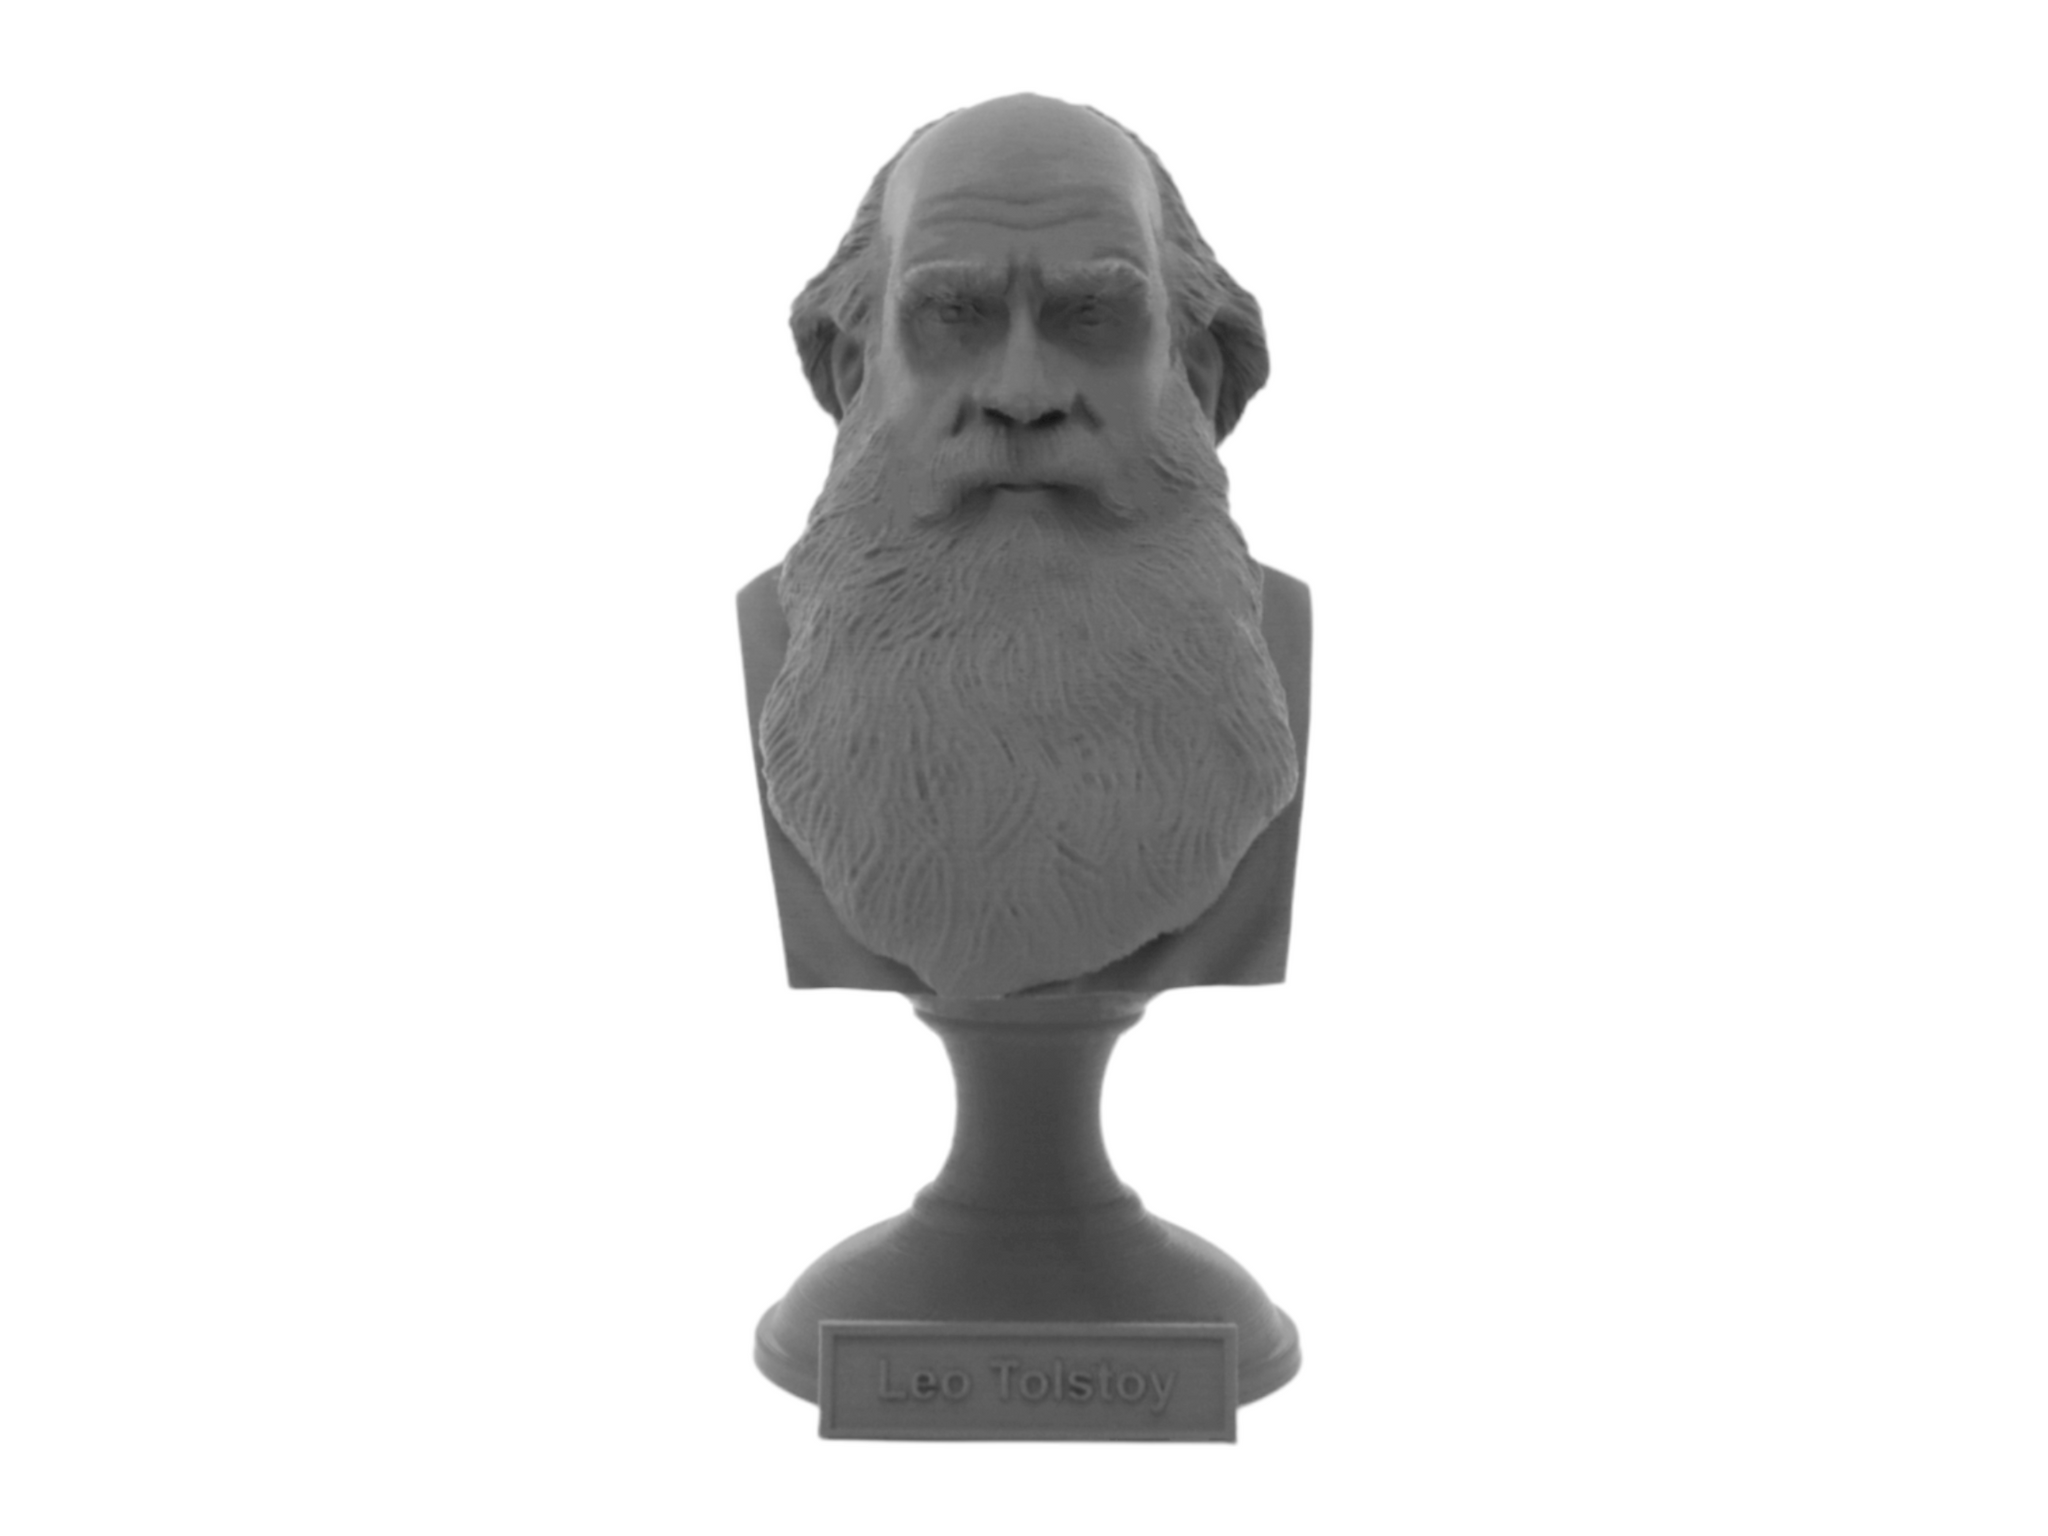 Leo Tolstoy, 5-inch Bust on Pedestal, Gray